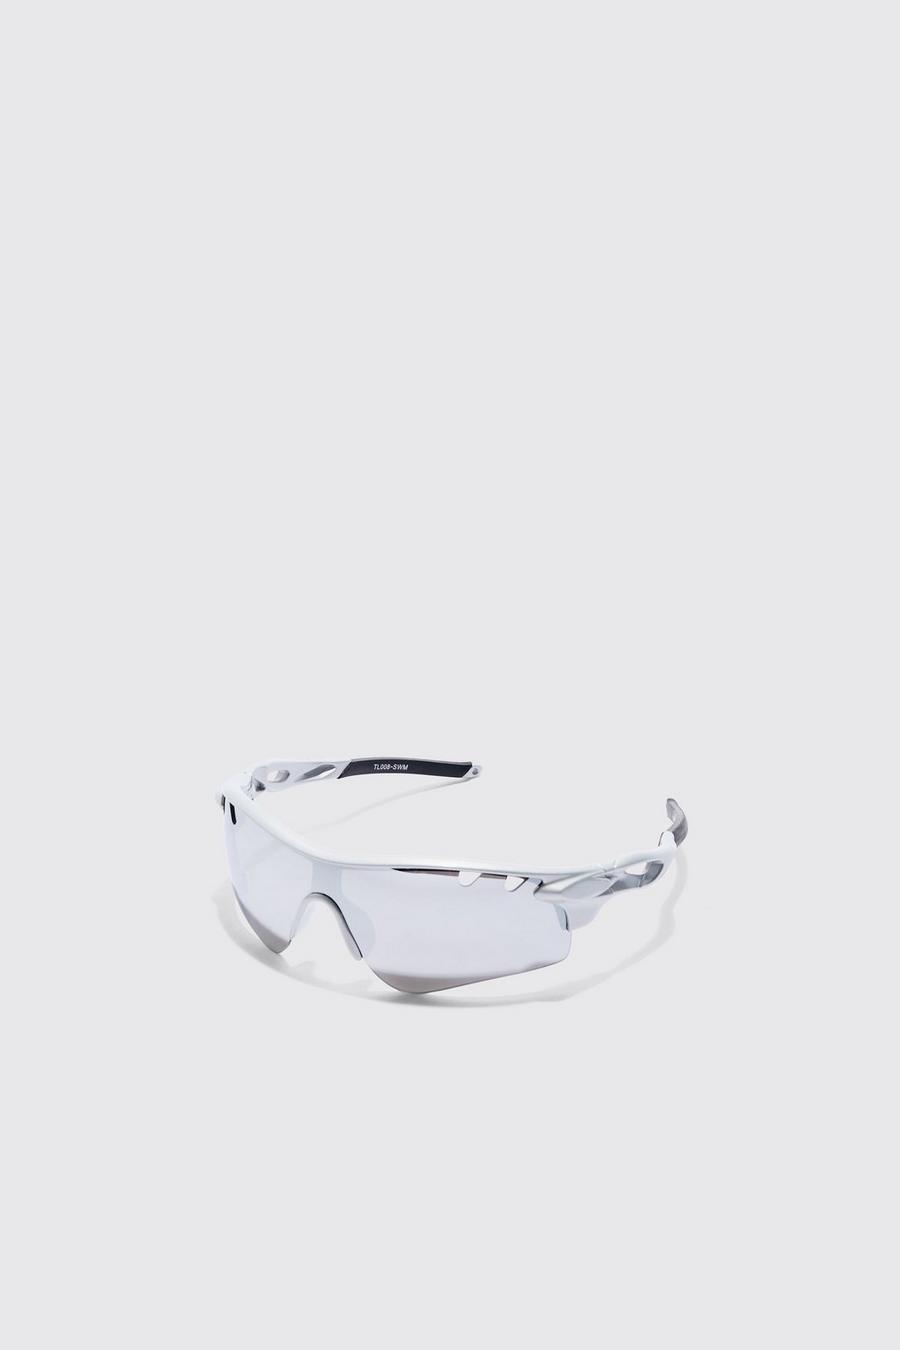 Silver argent Chrome Lens Angled Sunglasses